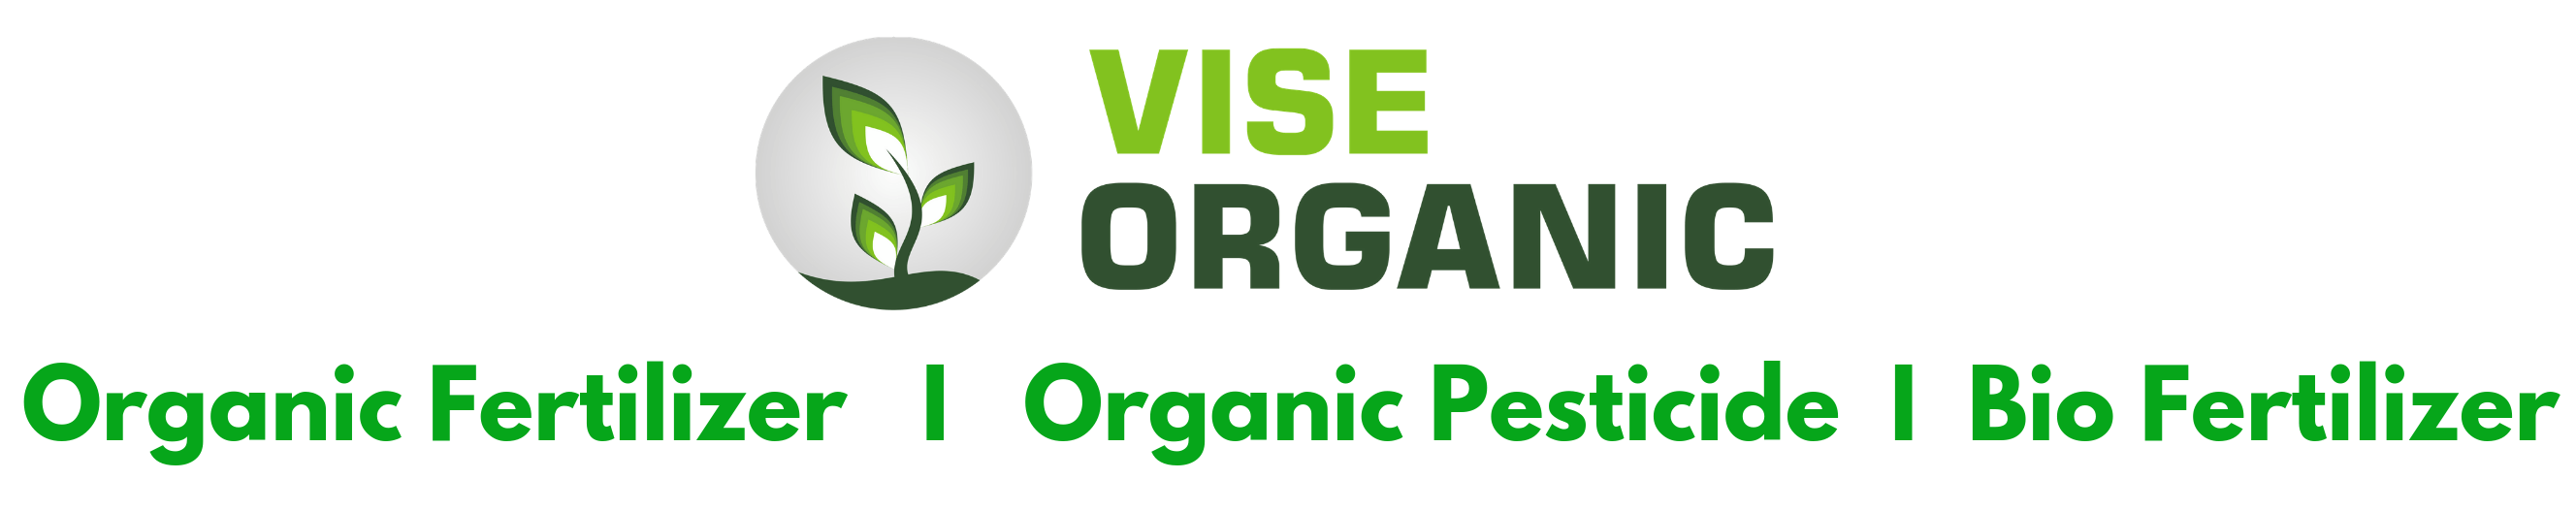 Vise Organic 